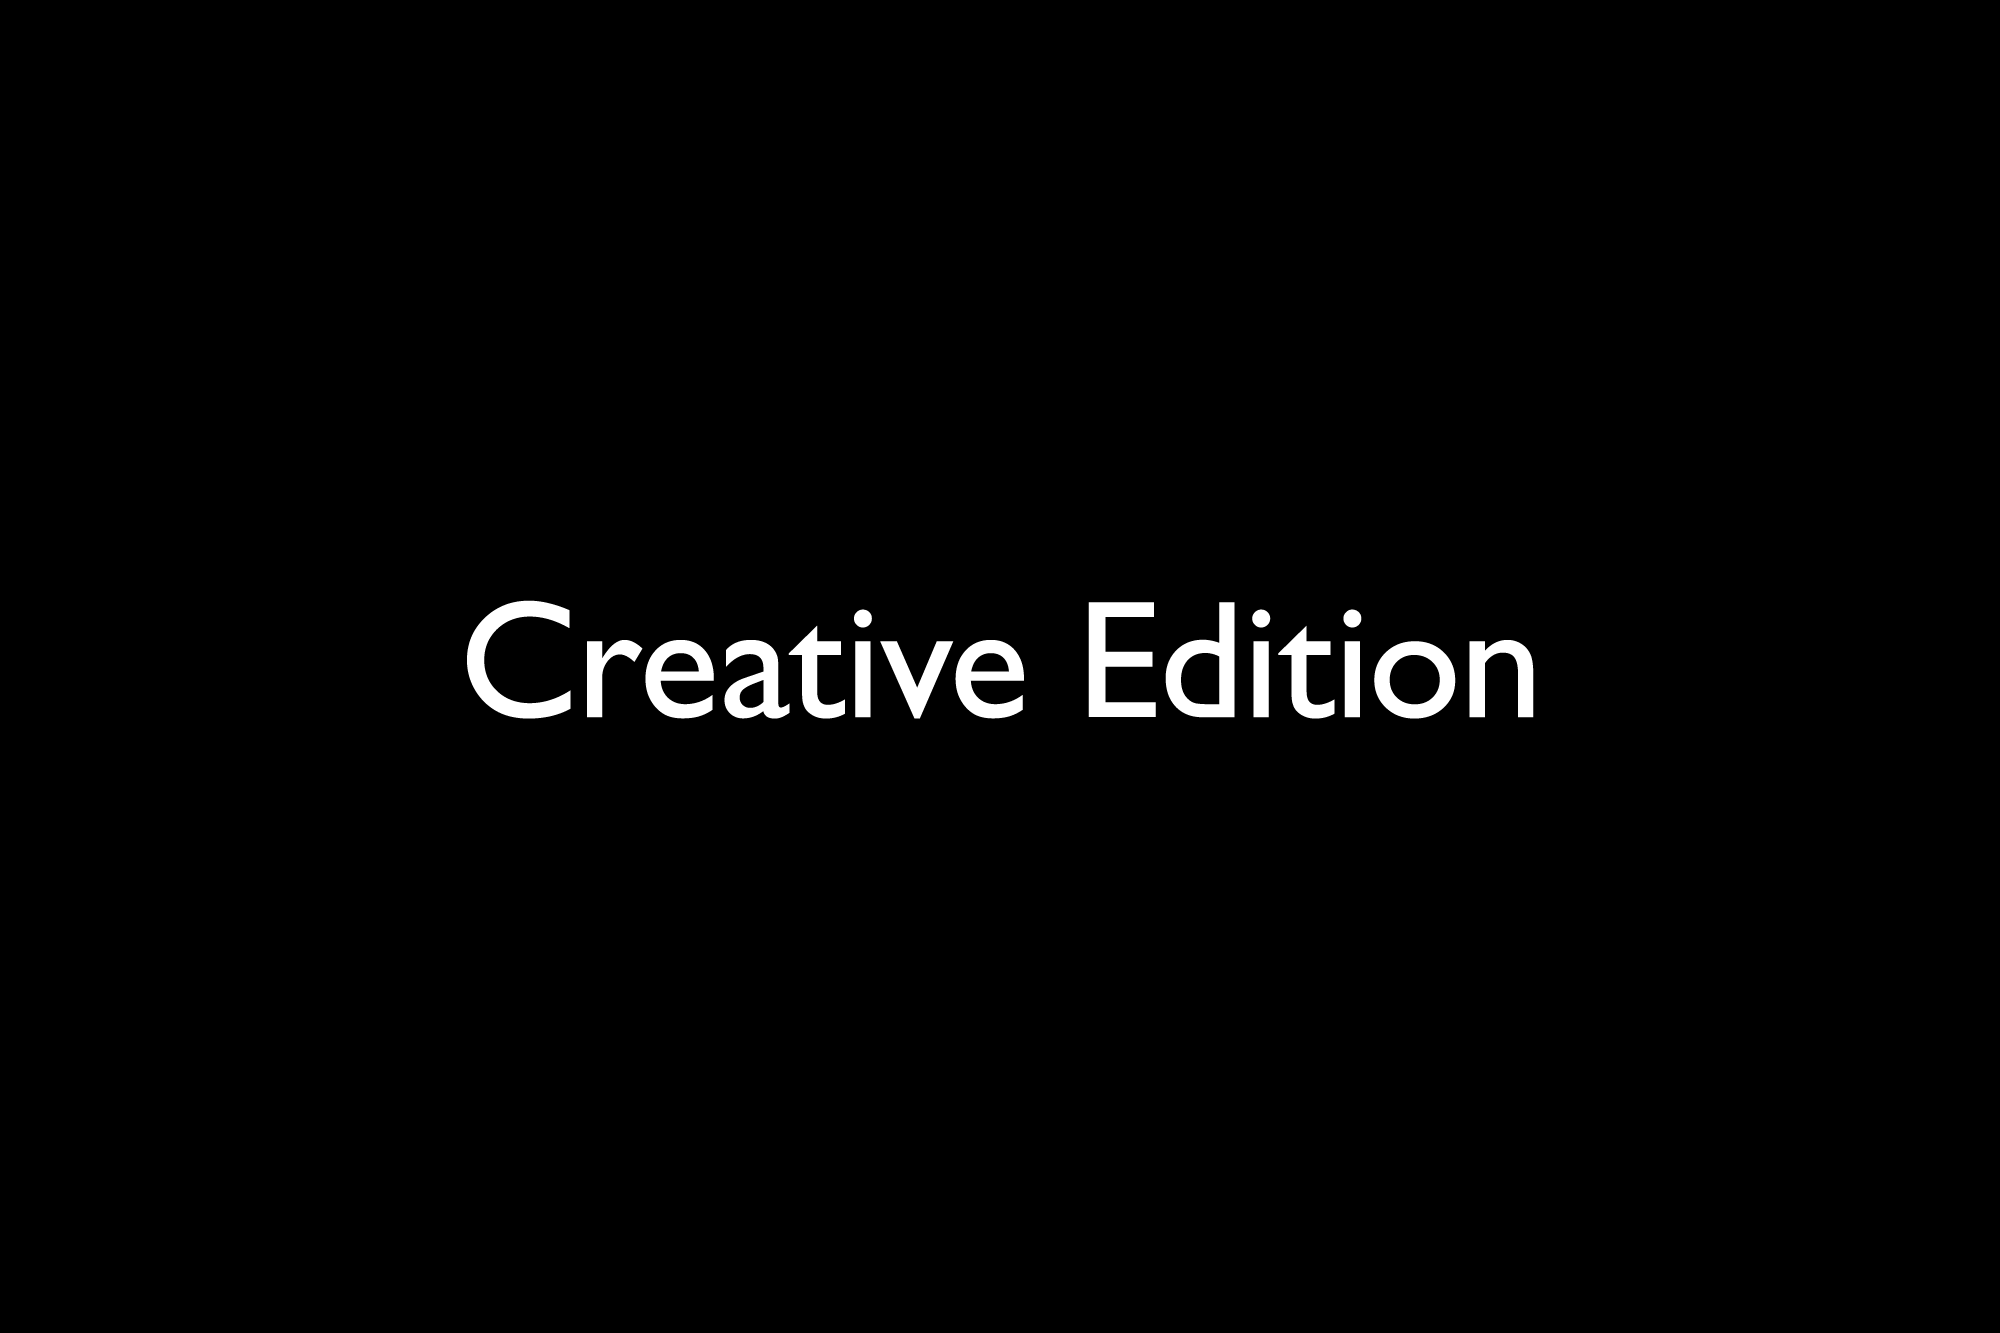 Creative-Edition-branding-logo-1-1.png